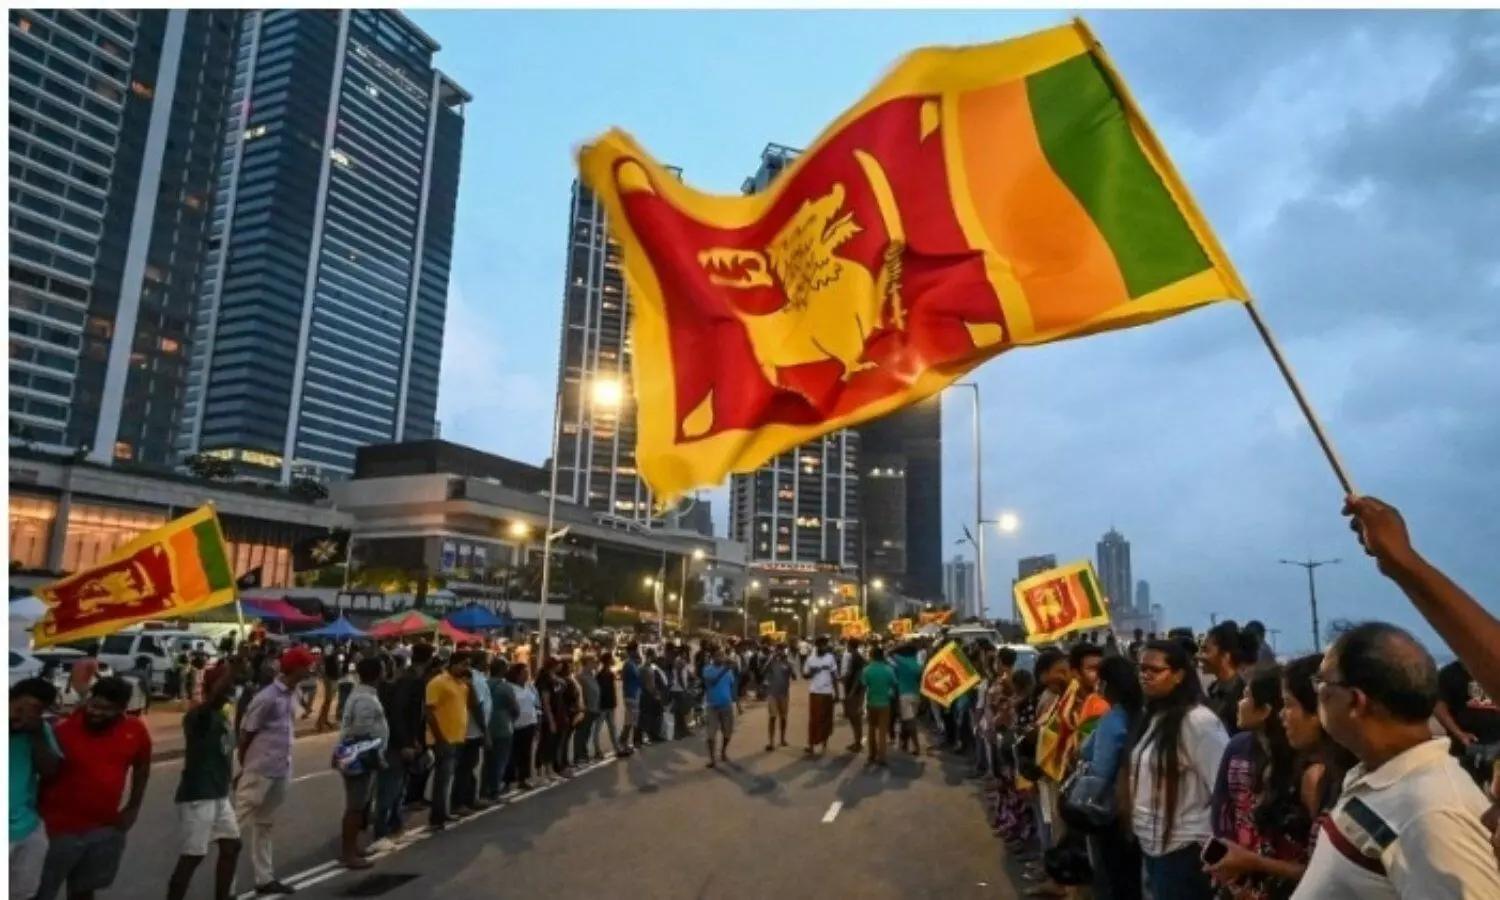 Sri Lanka Crisis